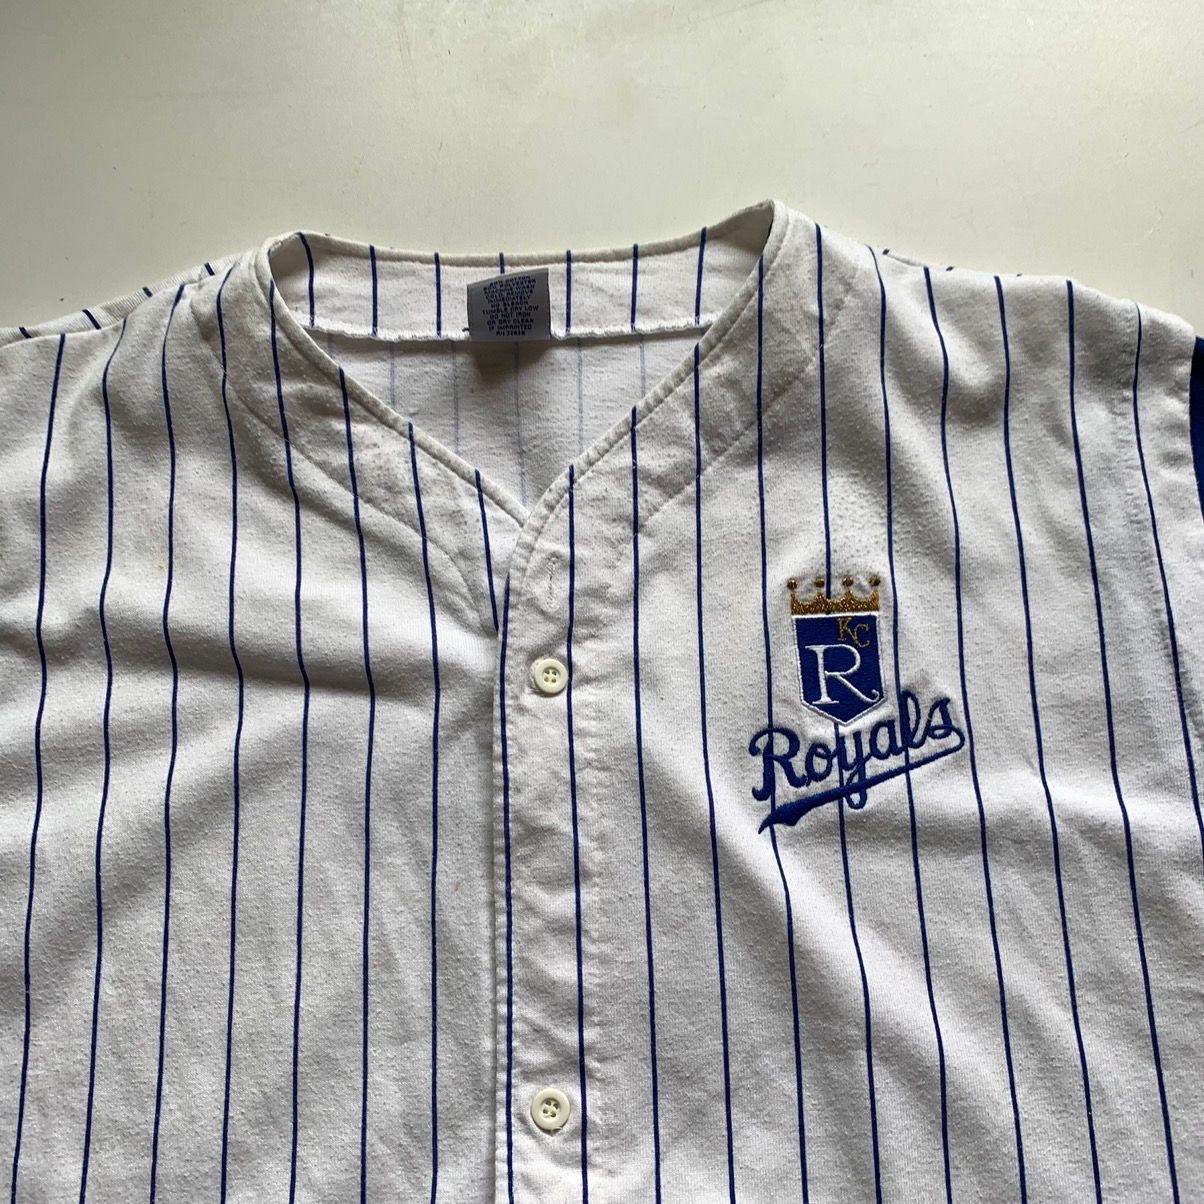 Vintage Vintage 90s Kansas City Royals mlb baseball jersey shirt Size US XL / EU 56 / 4 - 2 Preview